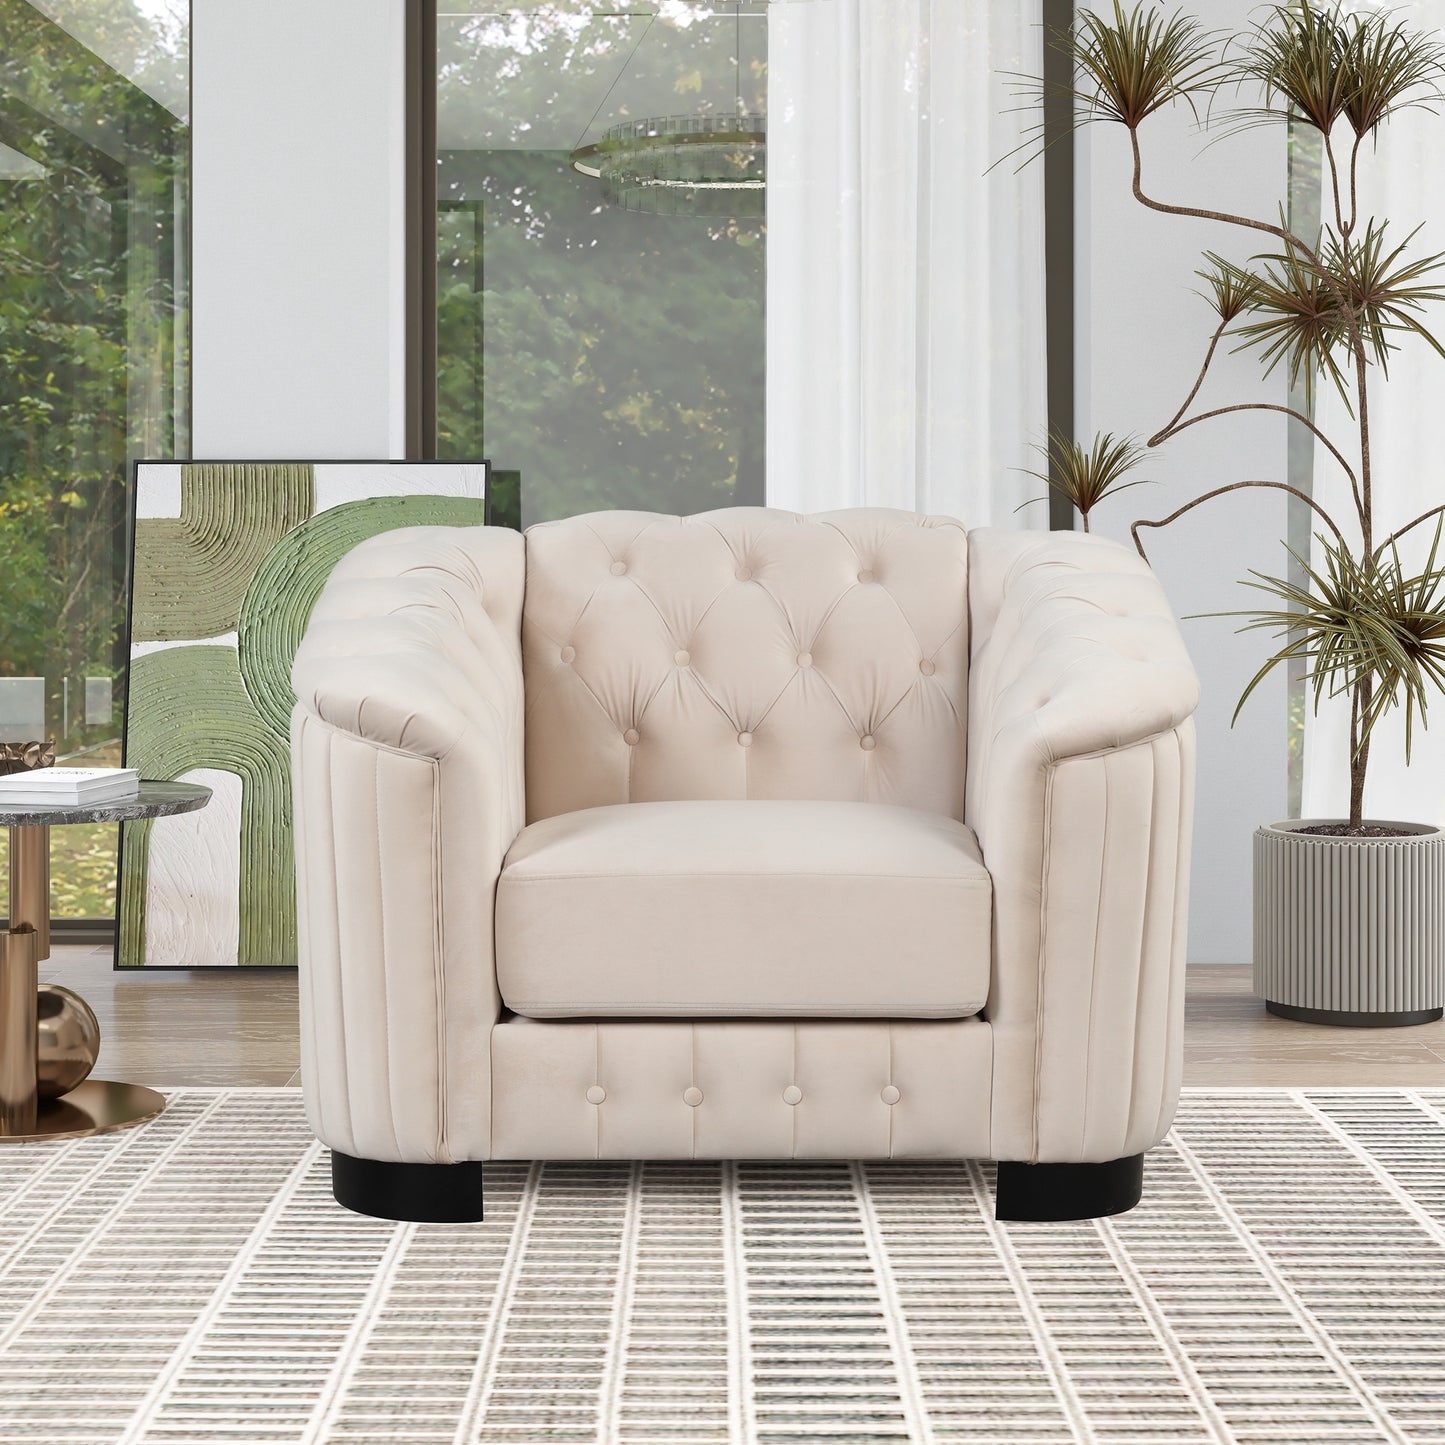 3-Piece Beige Premium Velvet Upholstered Sofa Set with Dark Wood Legs, Button Tufted, Luxury